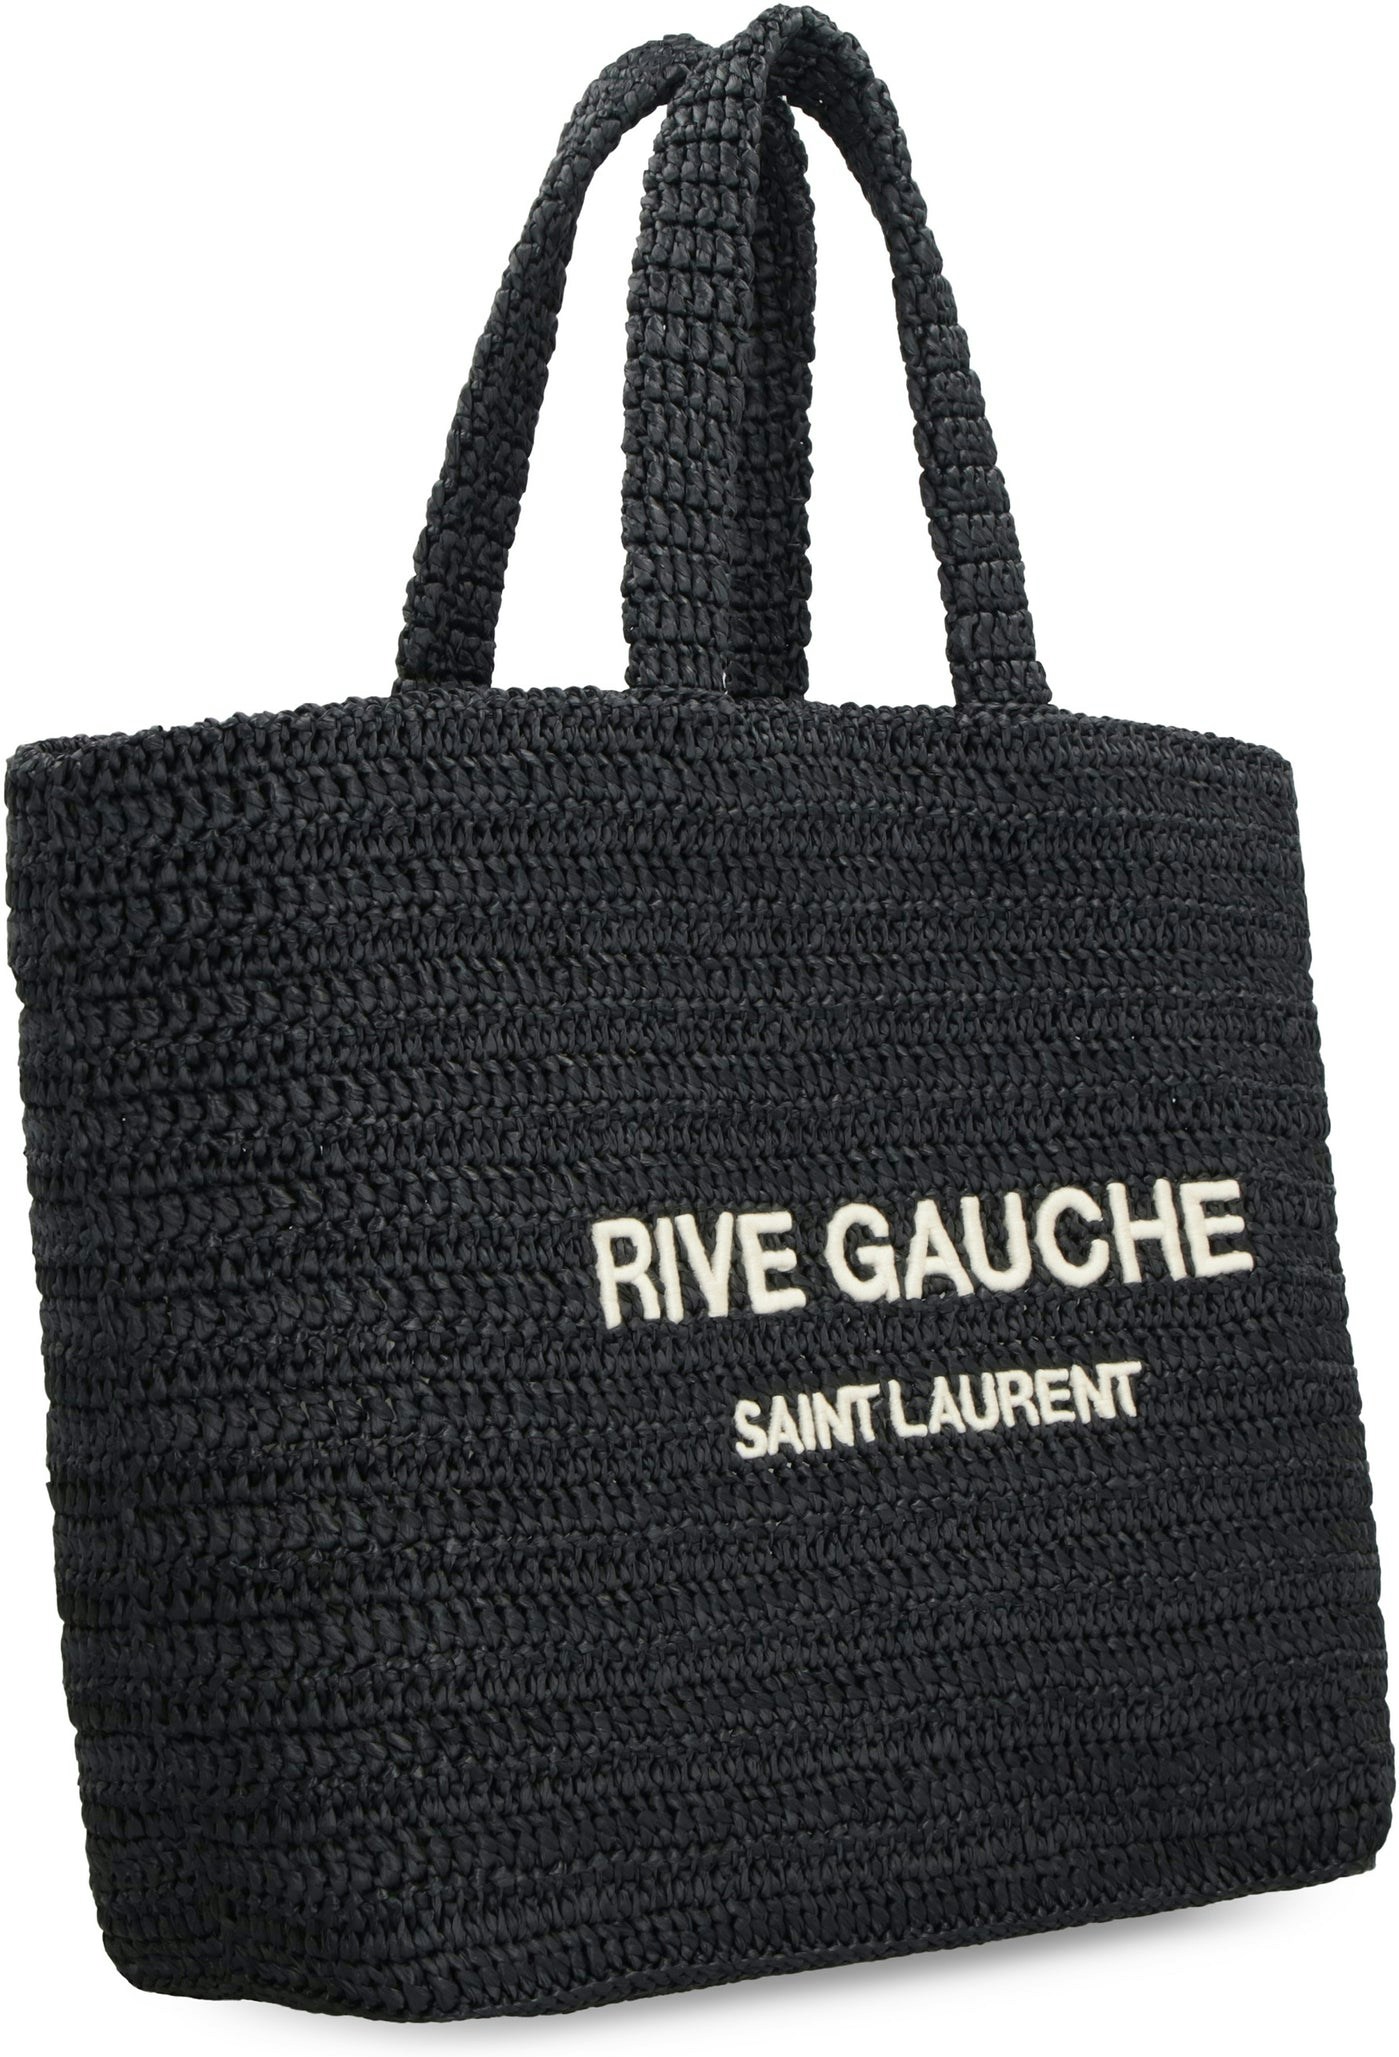 BLACK SAINT LAURENT RIVE GAUCHE CROCHET BAG (688864GAAA1)